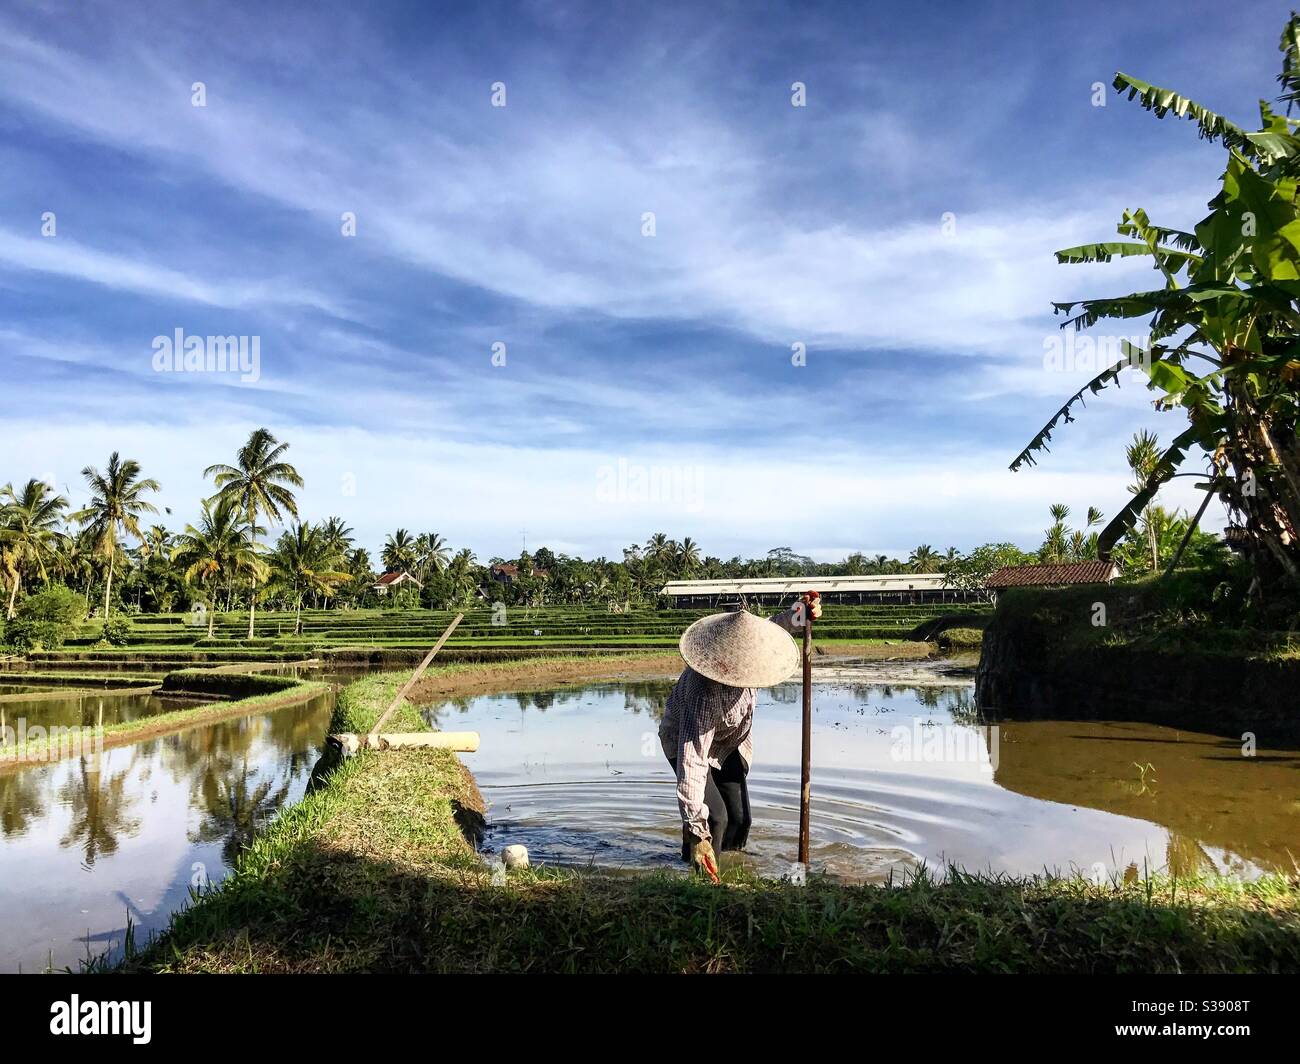 Working man at rice field - Bali Stock Photo